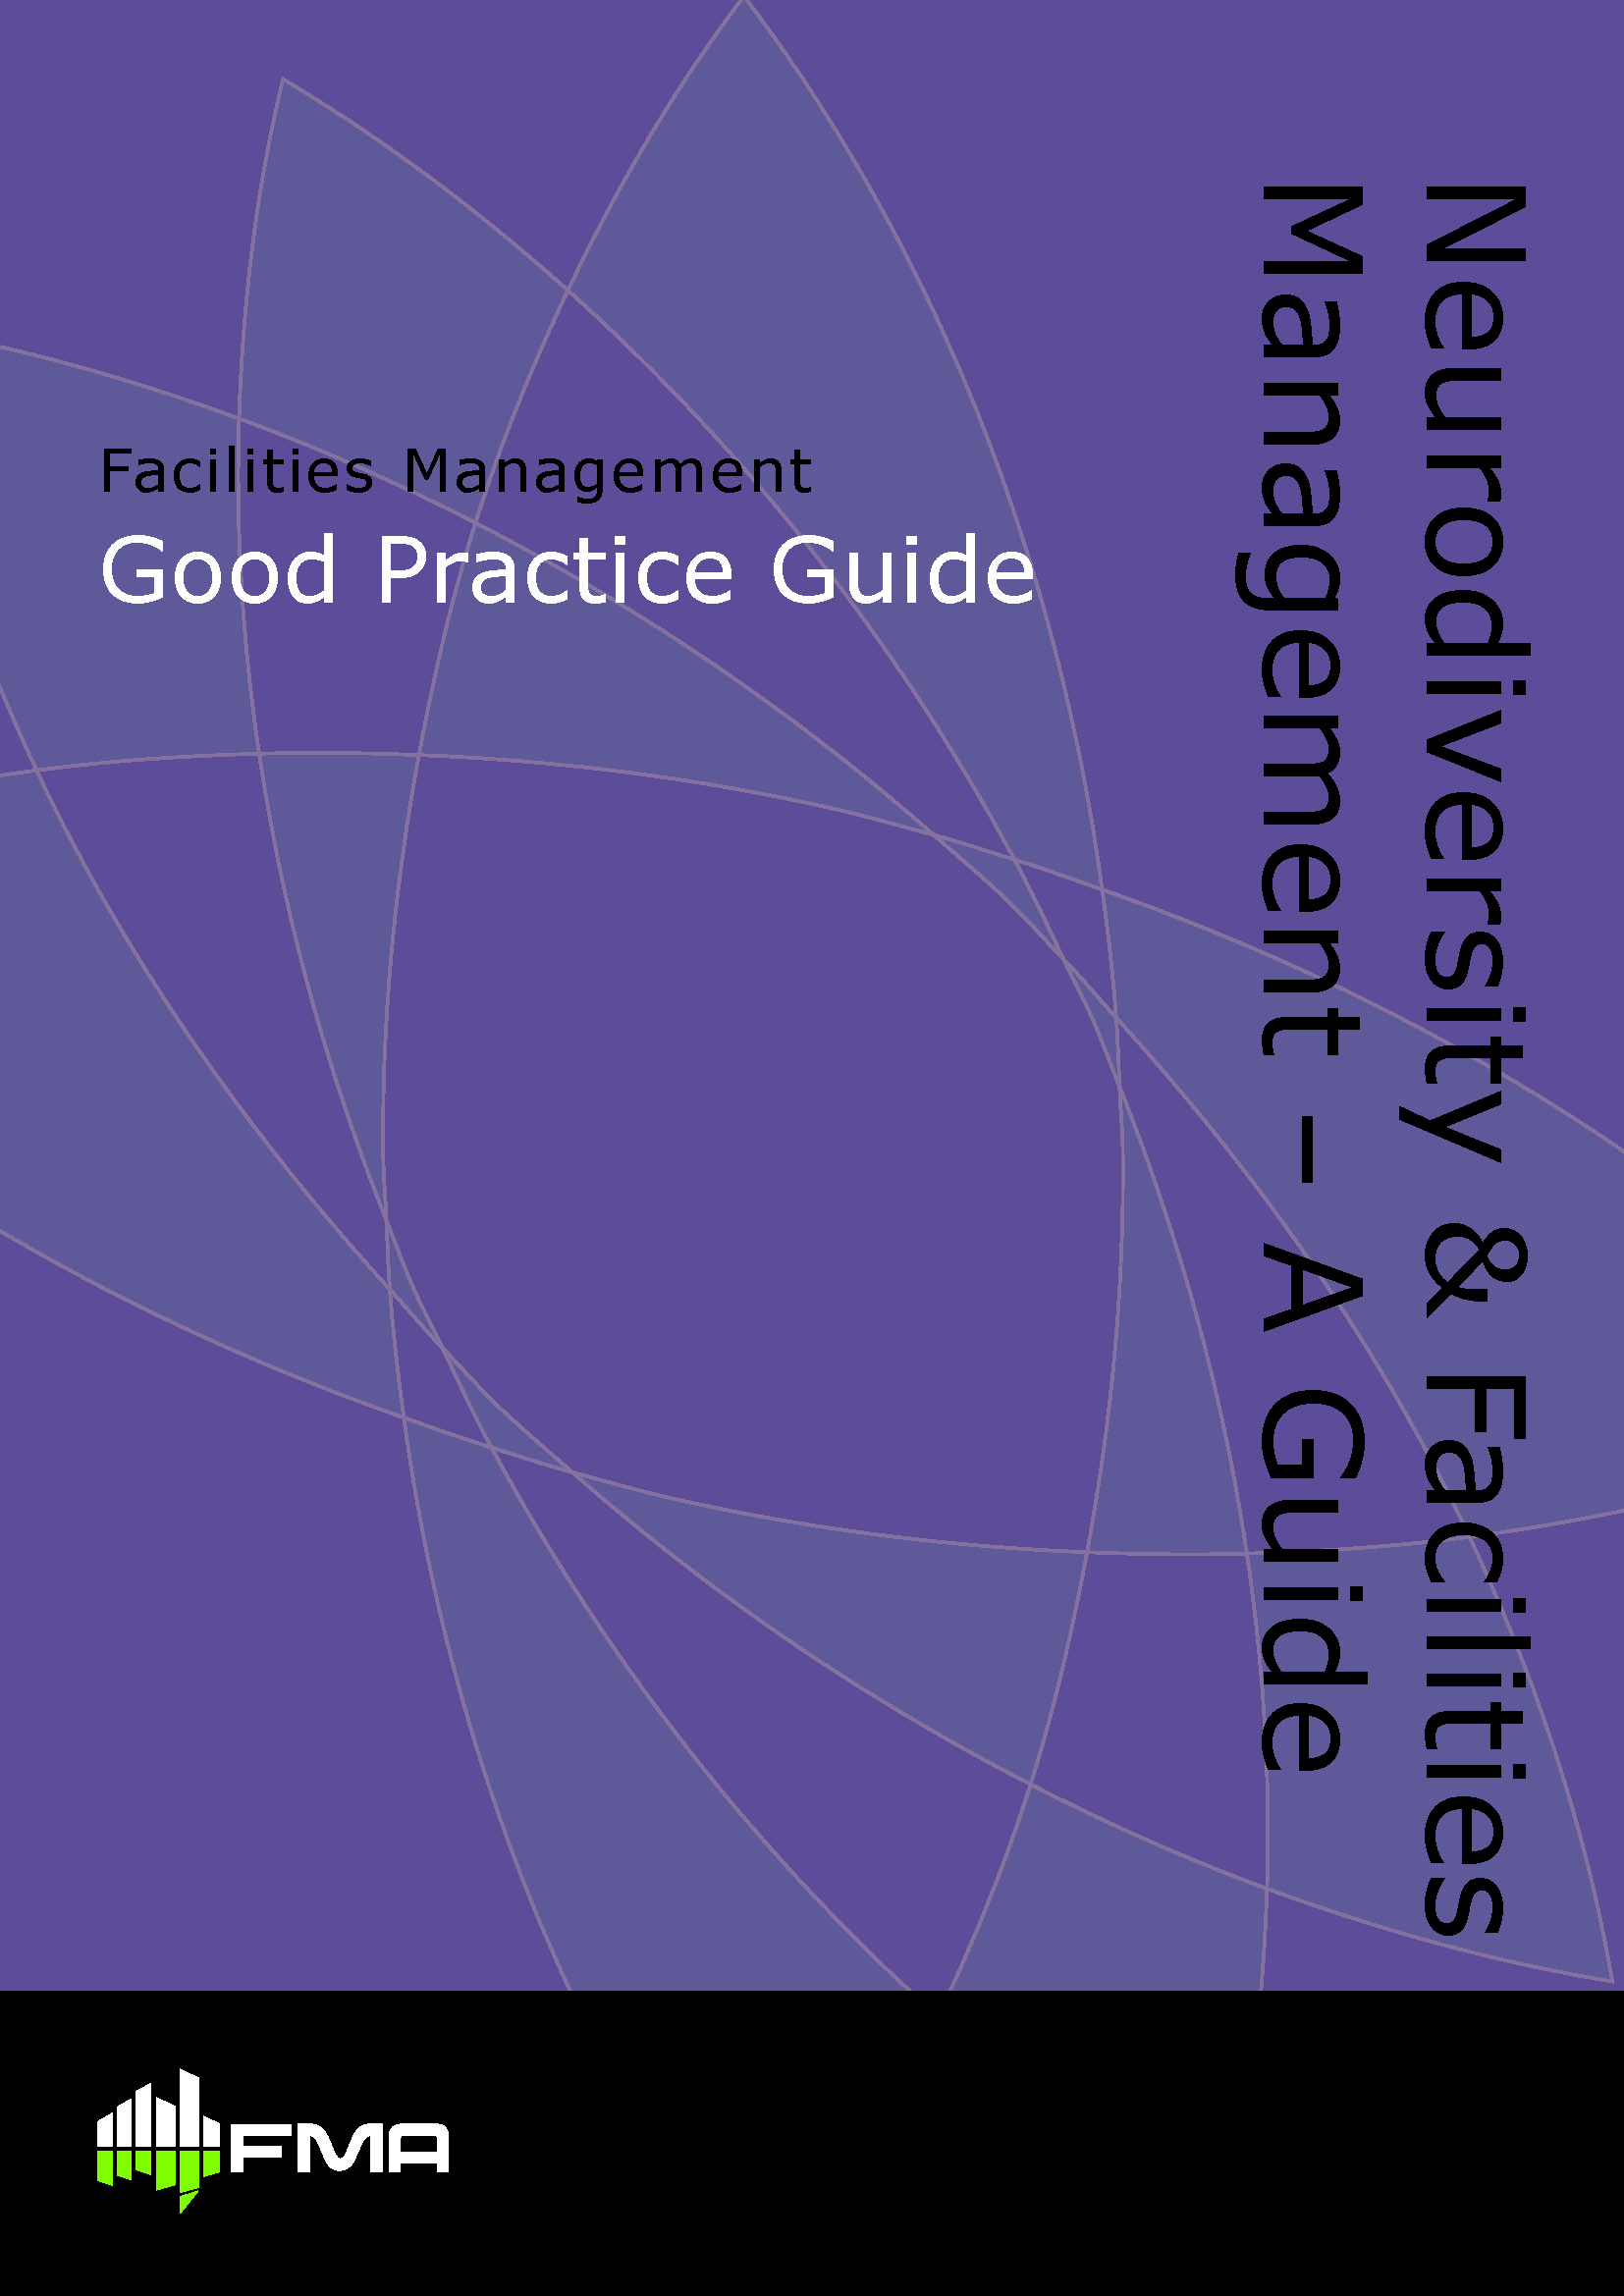 GPG Neurodiversity & Facilities Management - A Guide